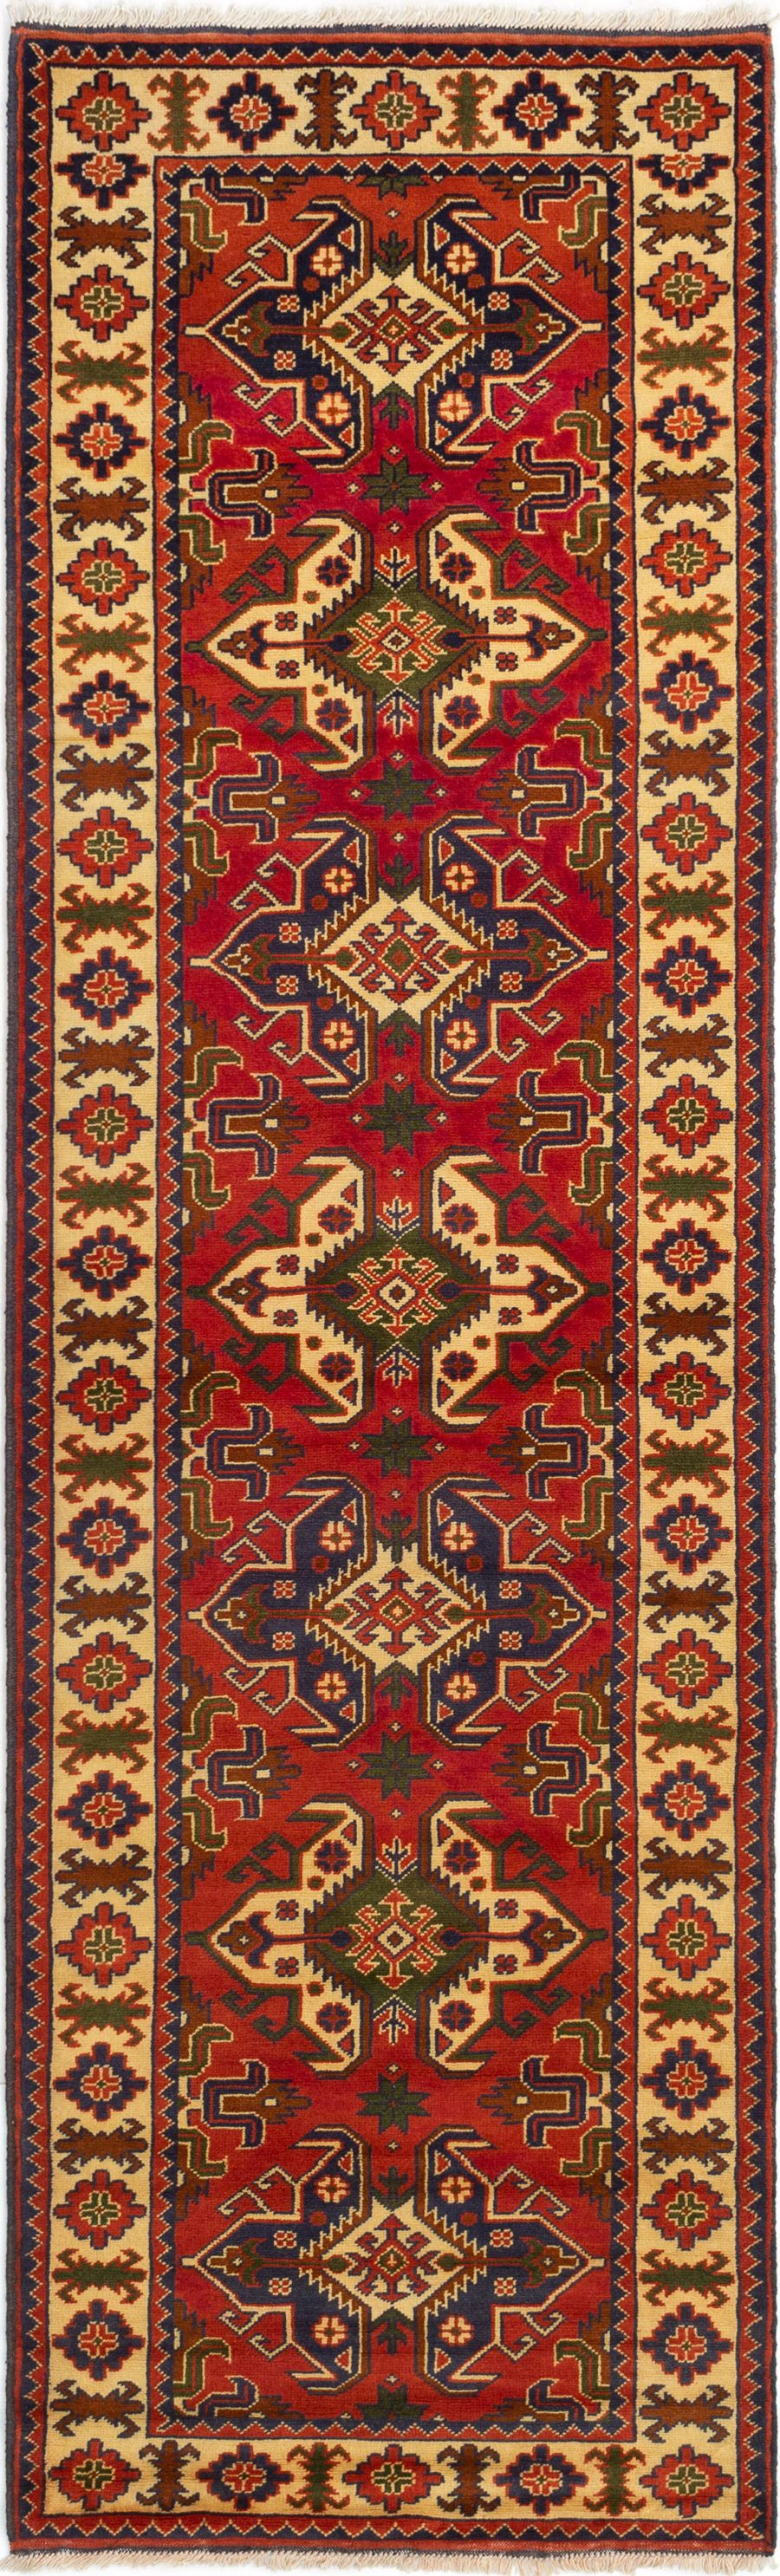 Hand-knotted Finest Kargahi Dark Copper Wool Rug 2'11" x 10'1" Size: 2'11" x 10'1"  